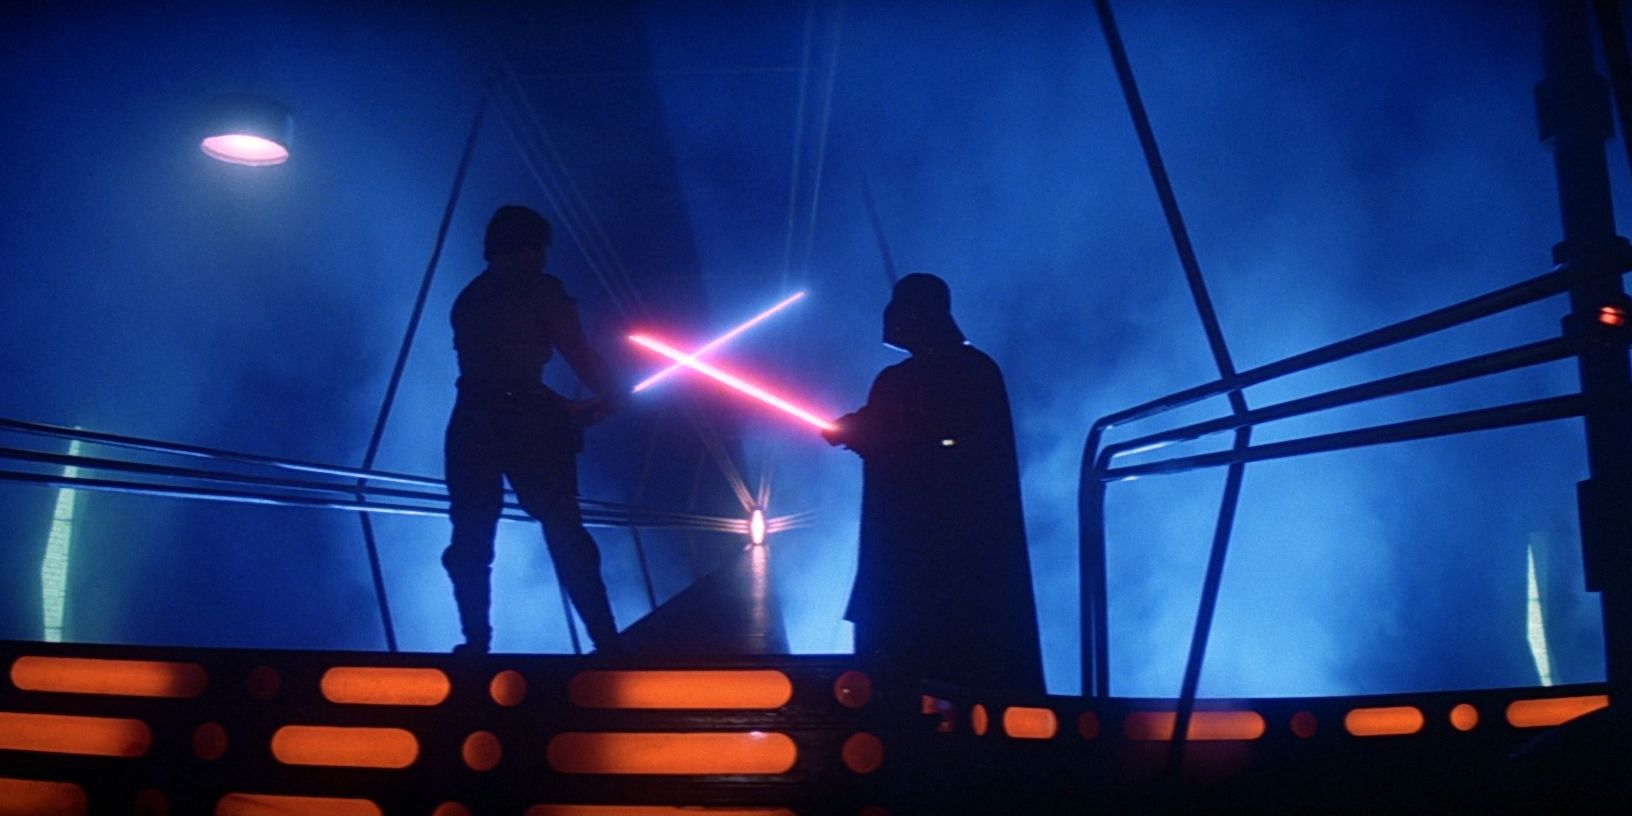 Luke vs Vader on Cloud City in Empire Strikes Back